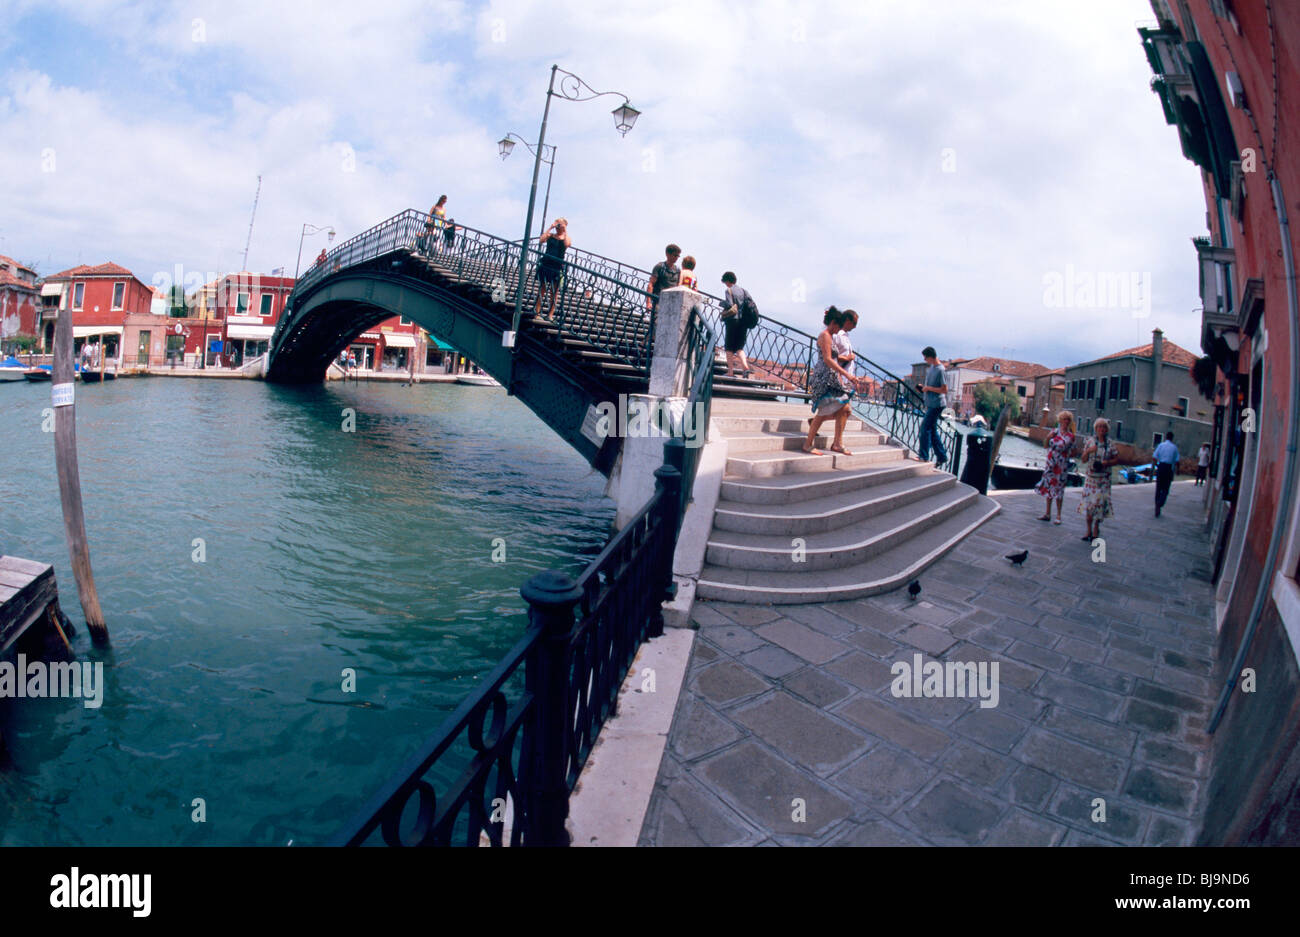 Insel Murano, Venedig, Juli 2008 - Ponte (Brücke) Vivarini Bartolomeo auf der Insel Murano Stockfoto